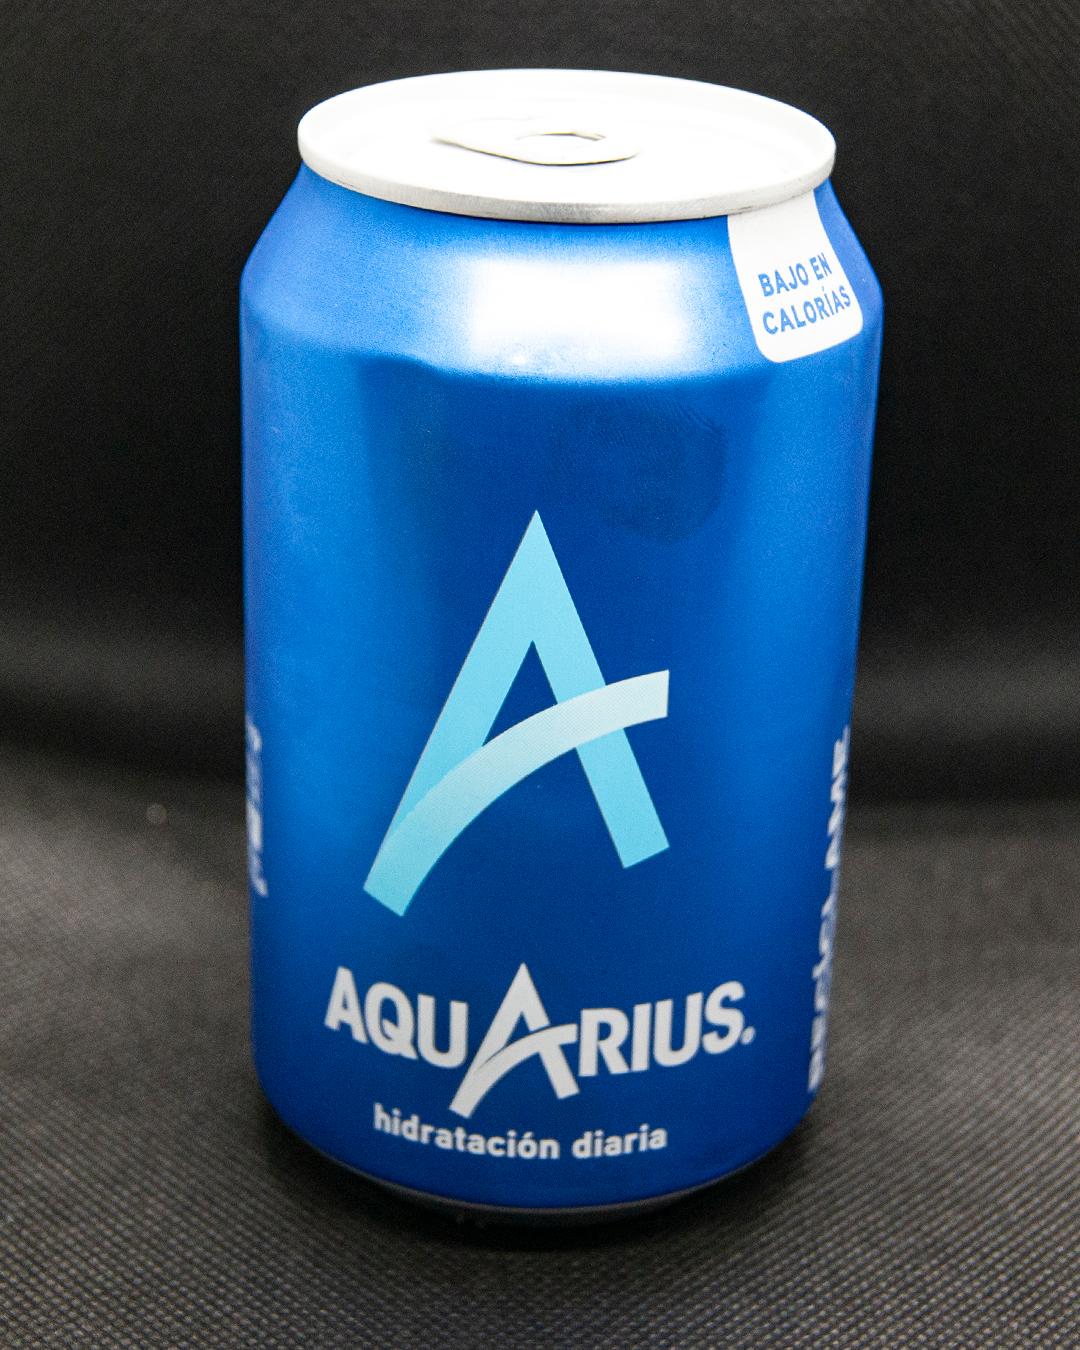 Aquarius Limón